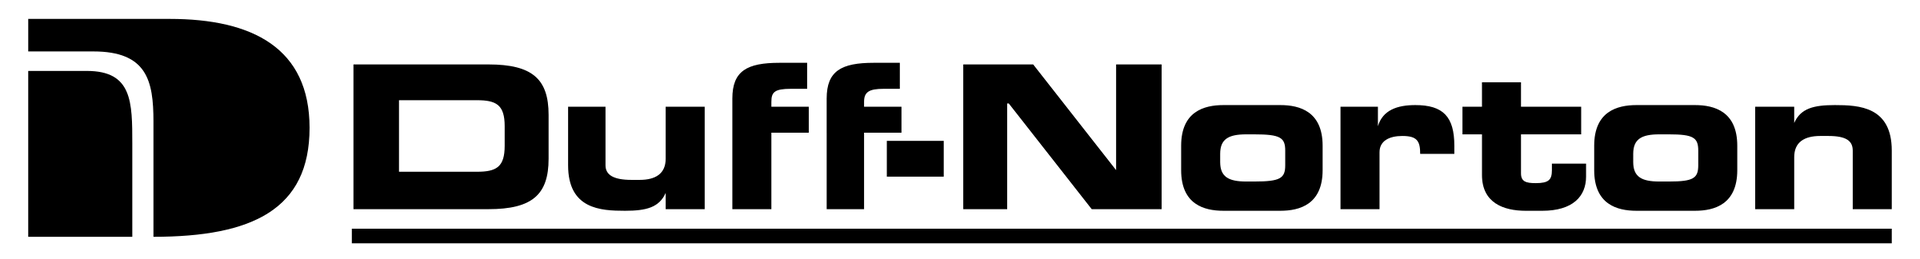 Duff-Norton logo